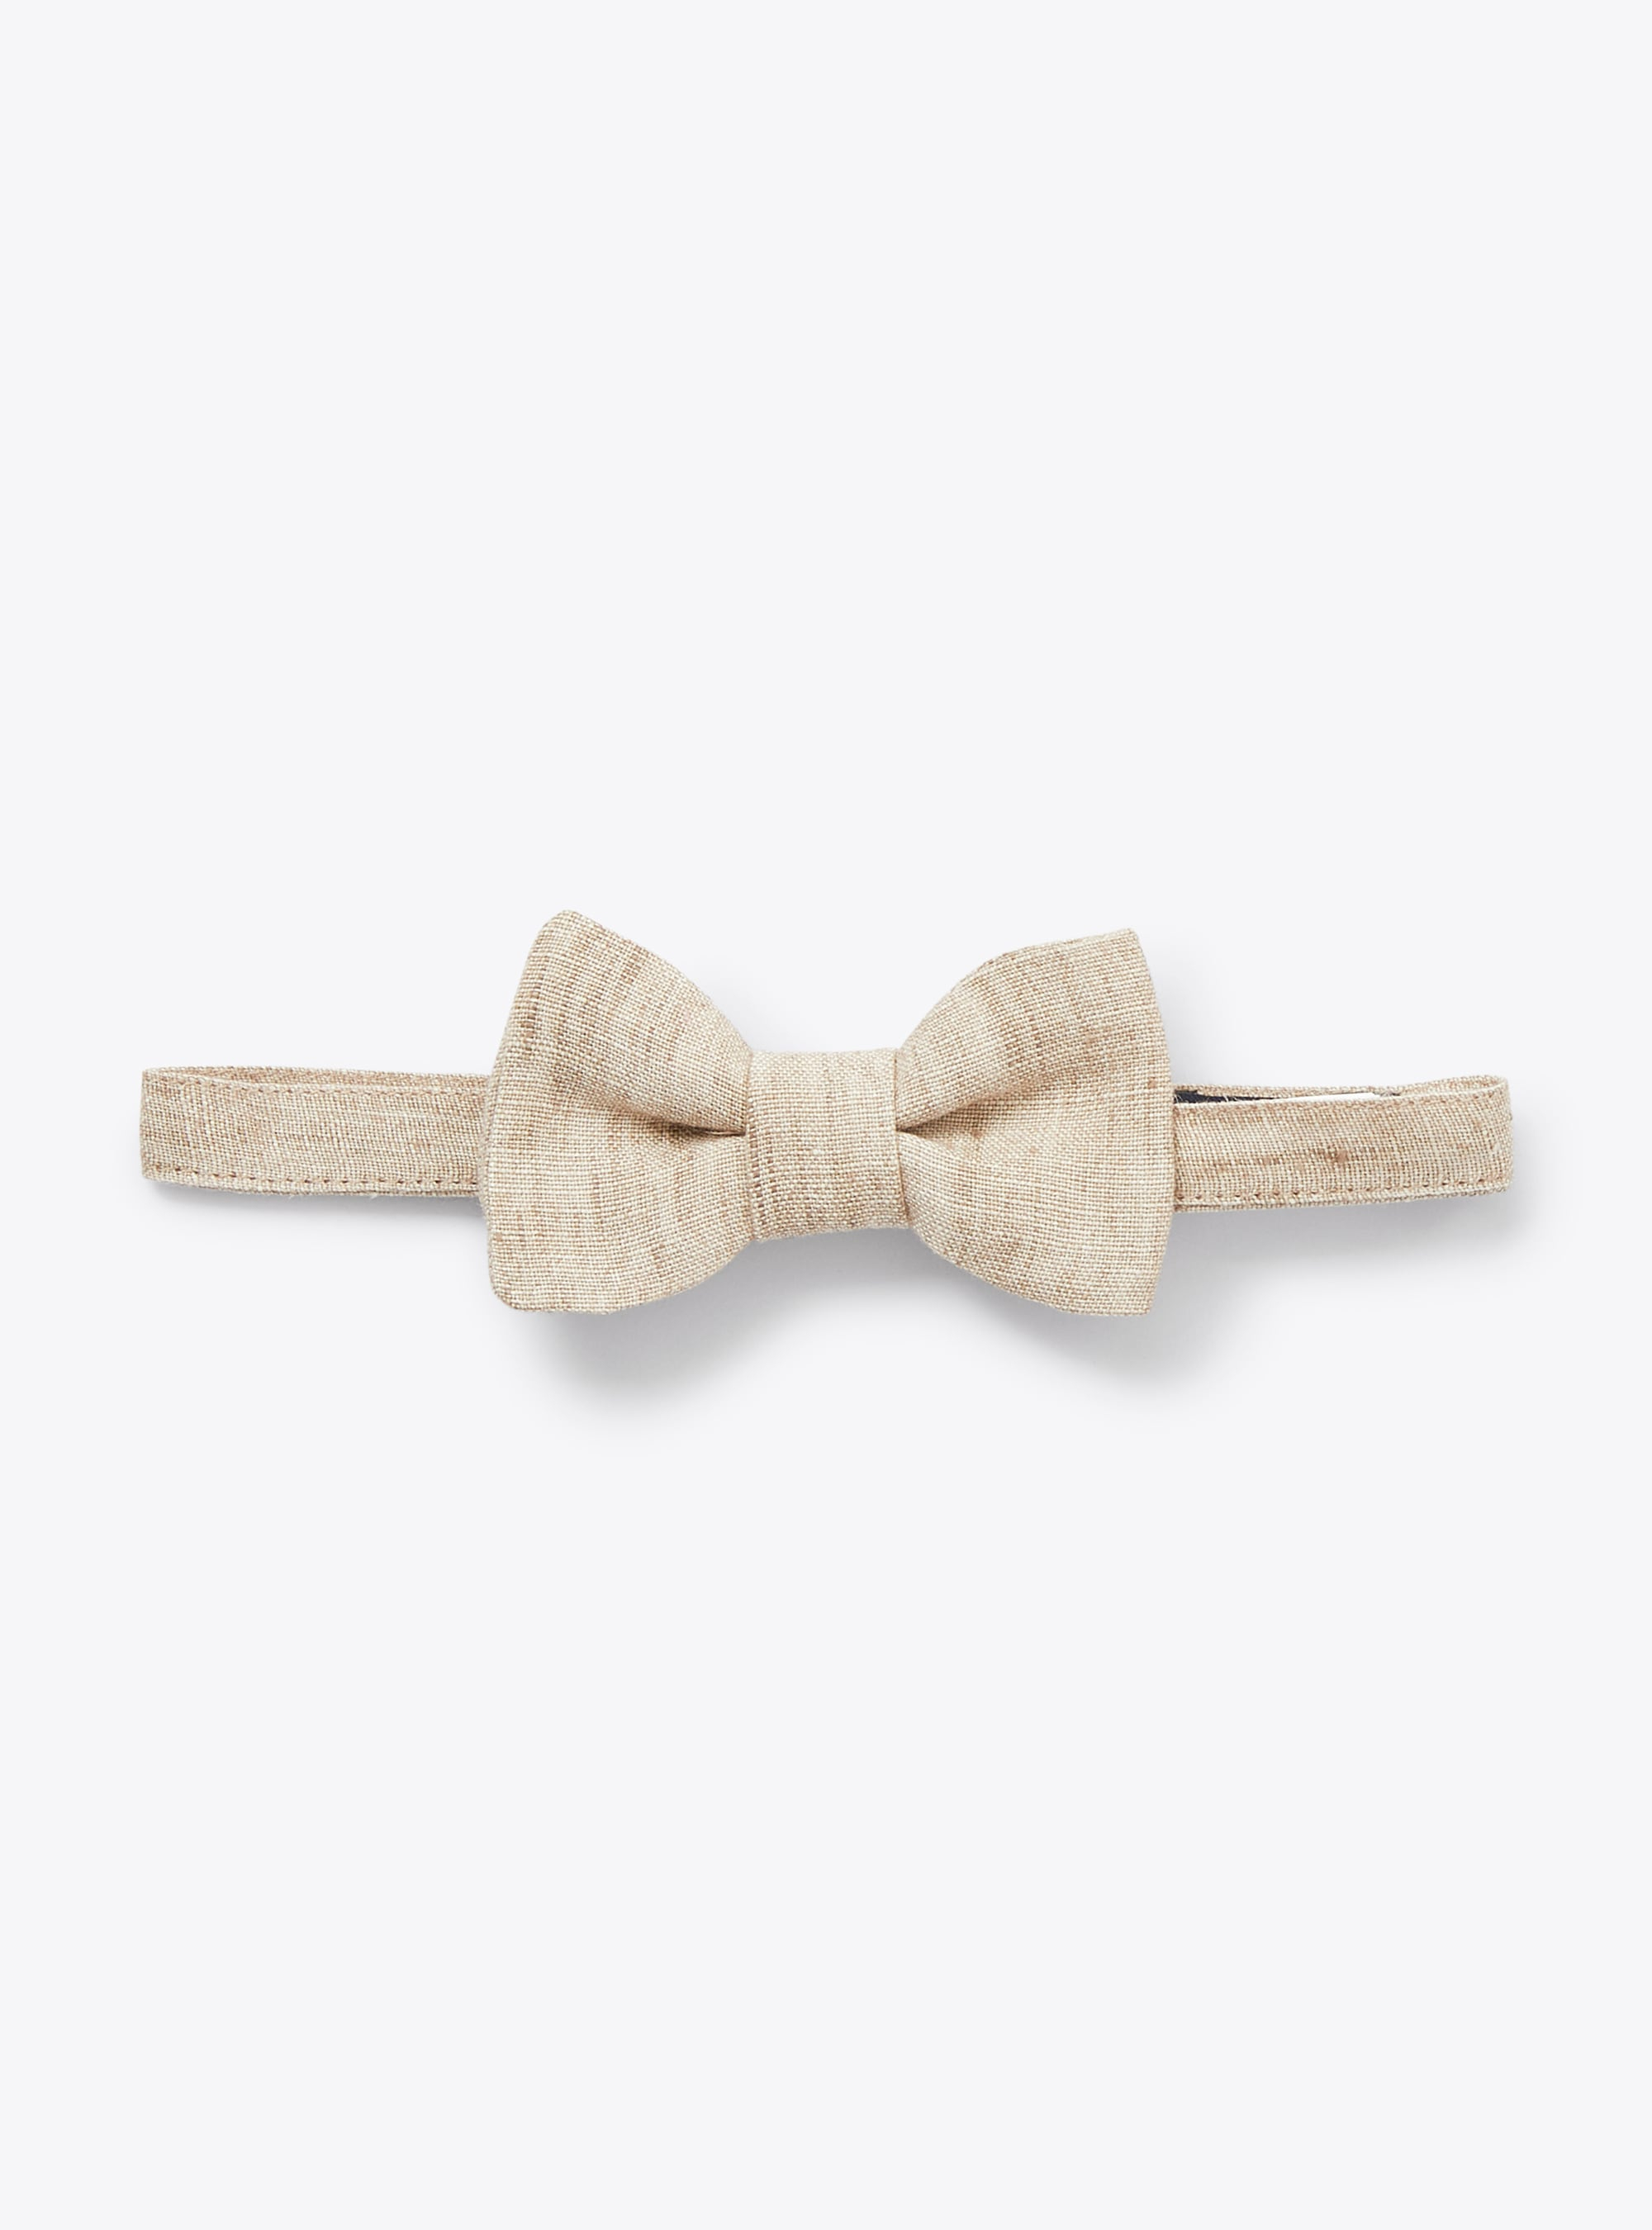 Bow tie in beige-mélange linen - Accessories - Il Gufo